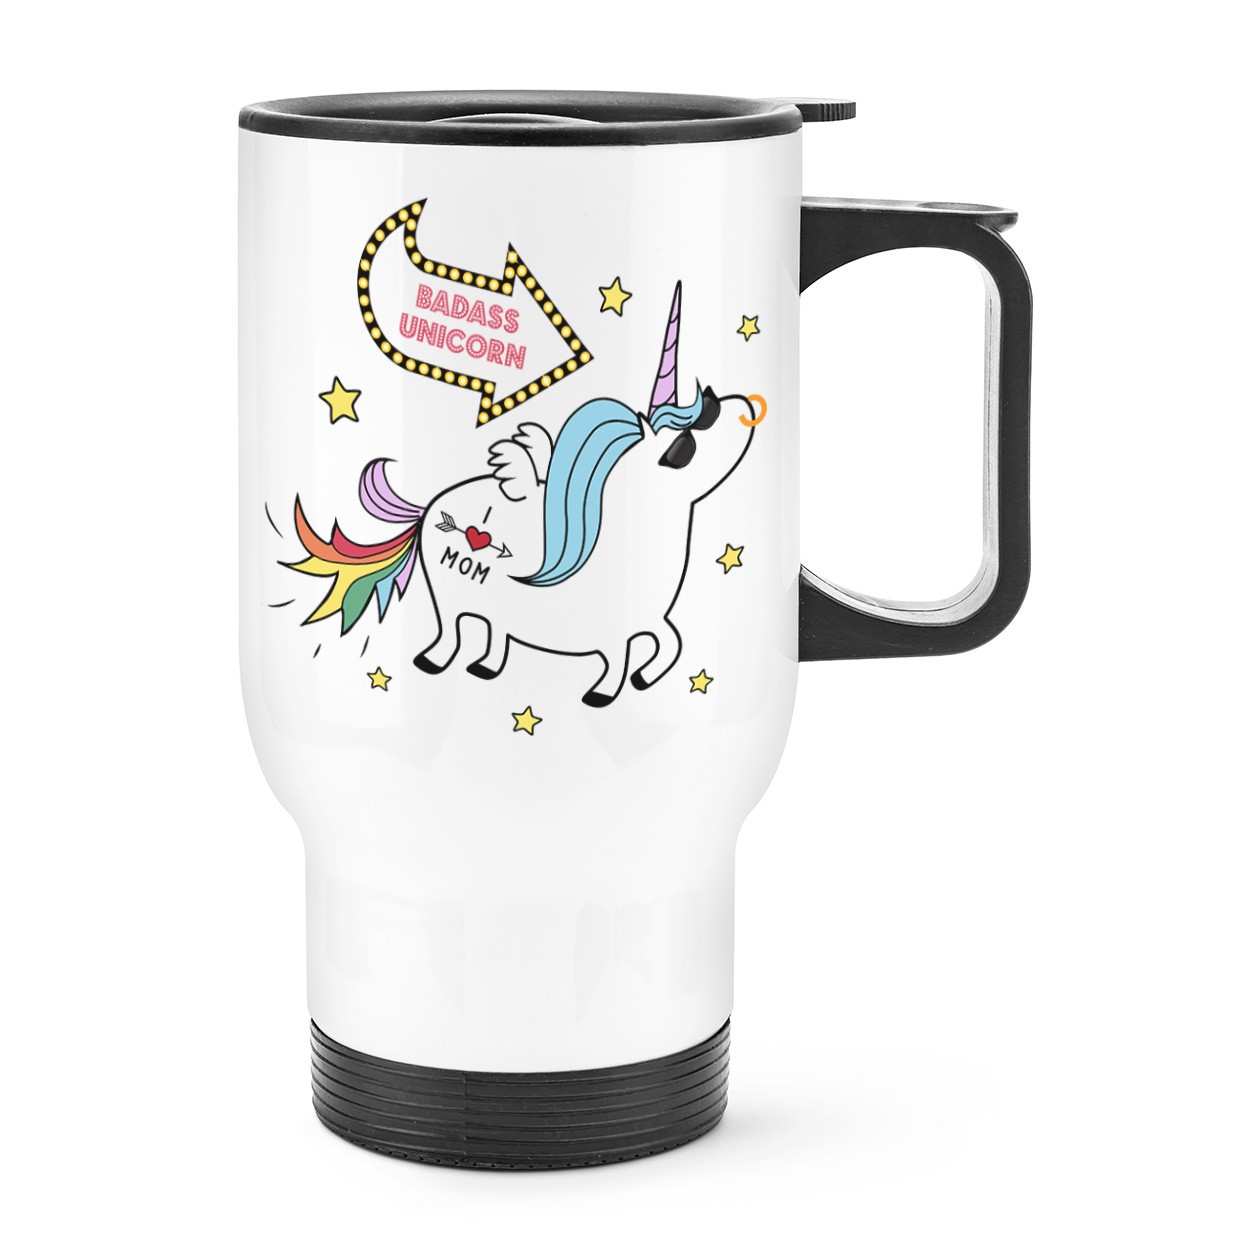 Badass Unicorn Travel Mug Cup With Handle